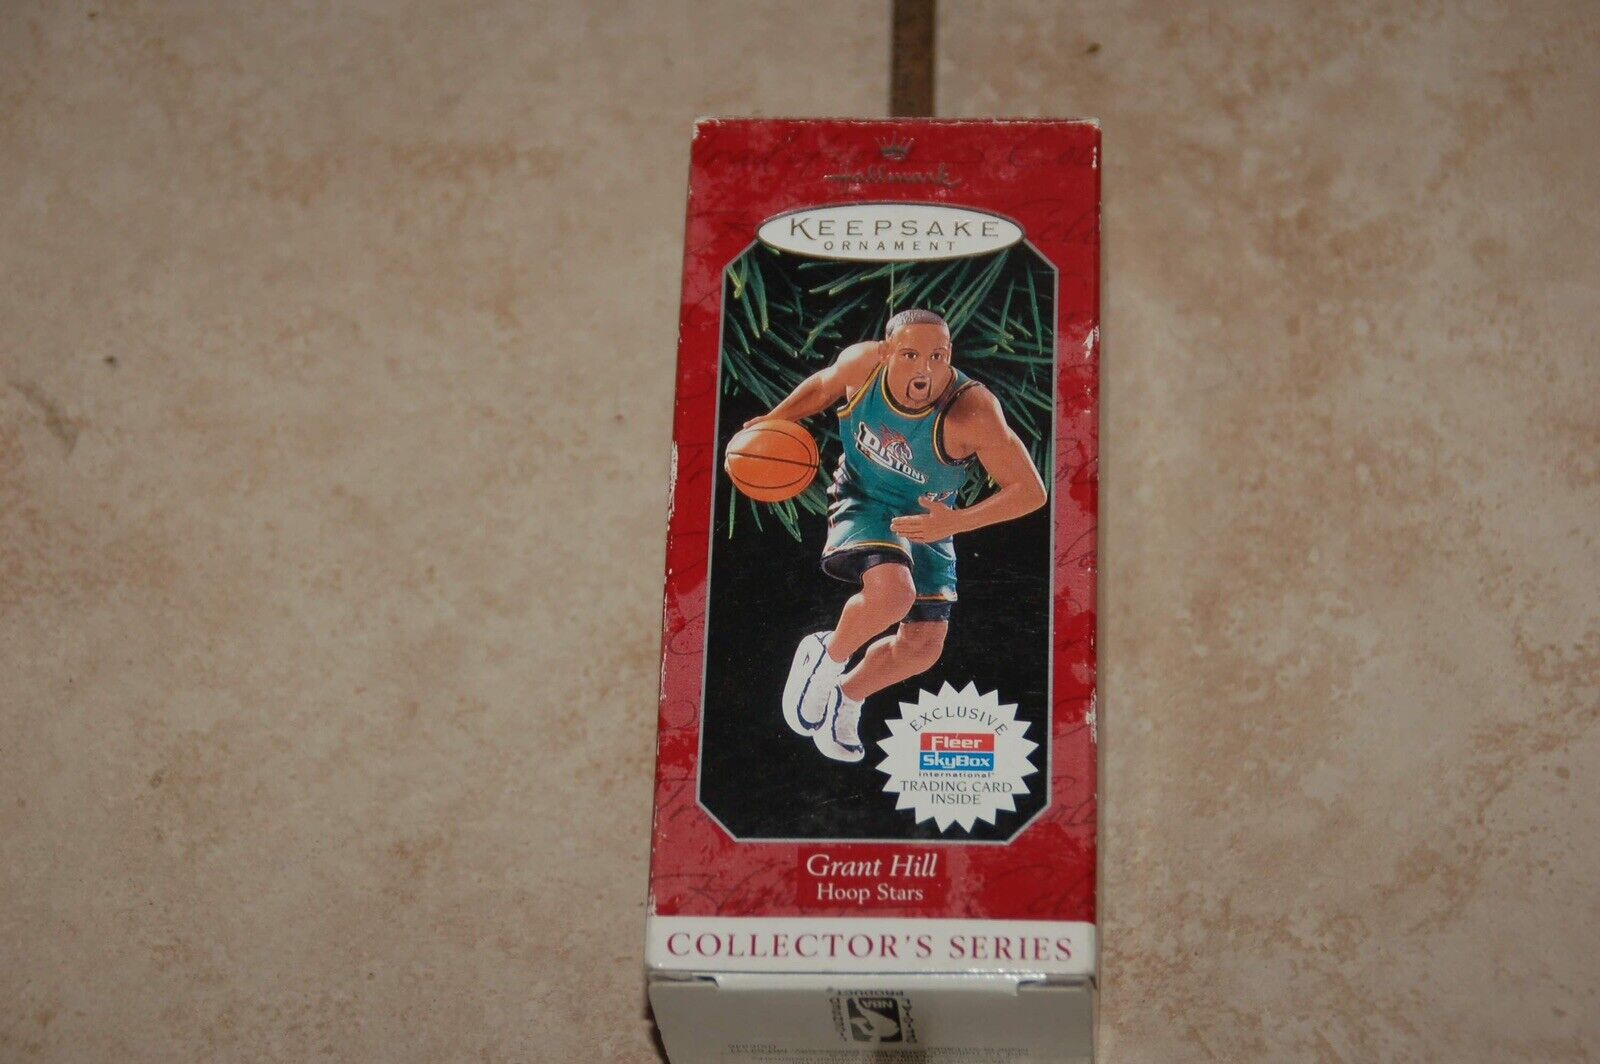 1998 Hallmark Keepsake Ornament Hoop Stars Collector Grant Hill Detroit Pistons